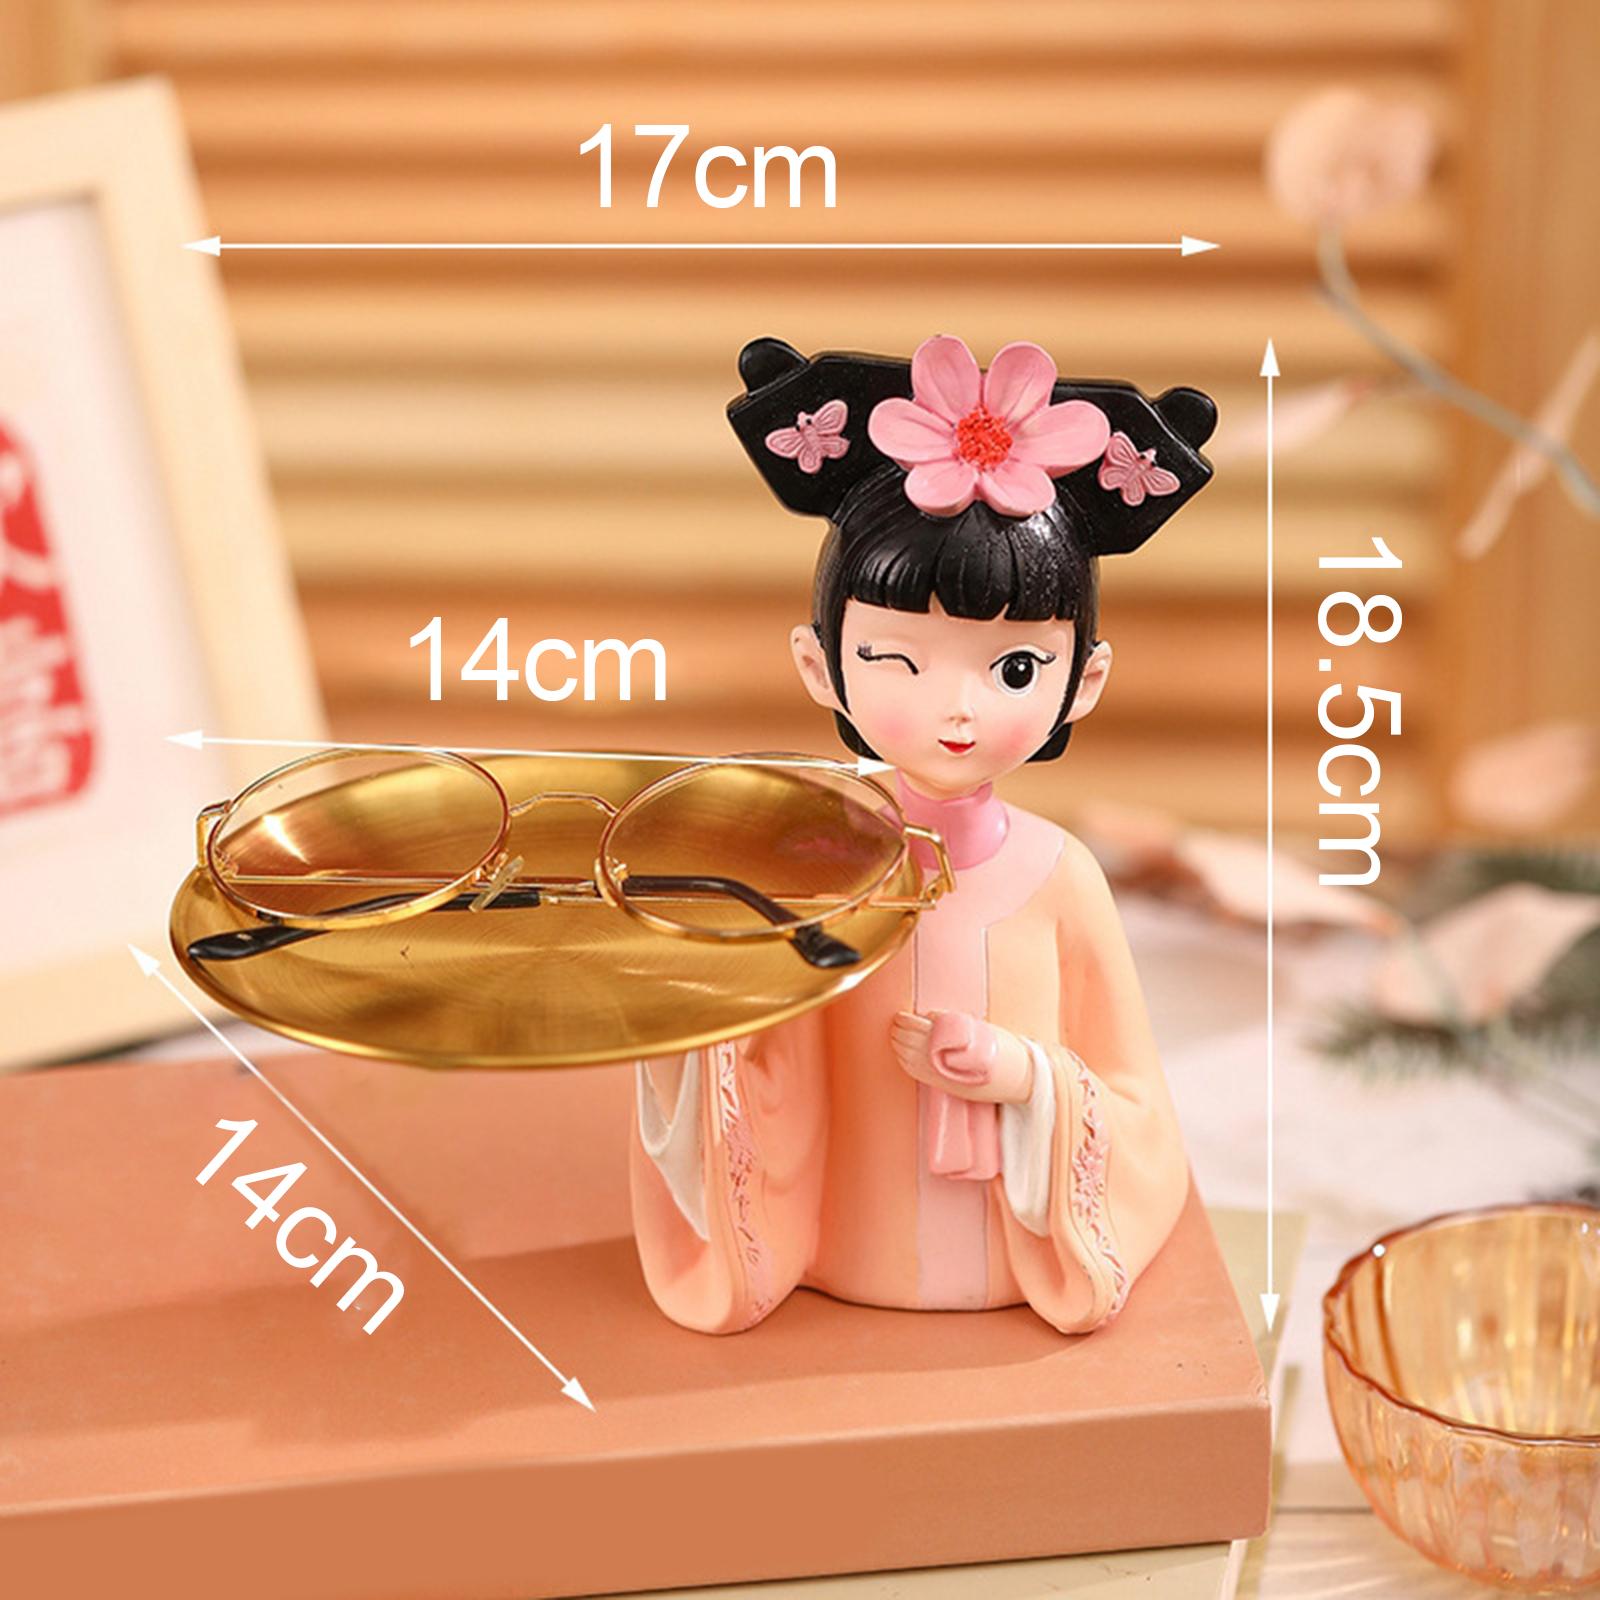 Creative Girl Figurine Jewelry Trinket Storage Home Table Decor Cookie